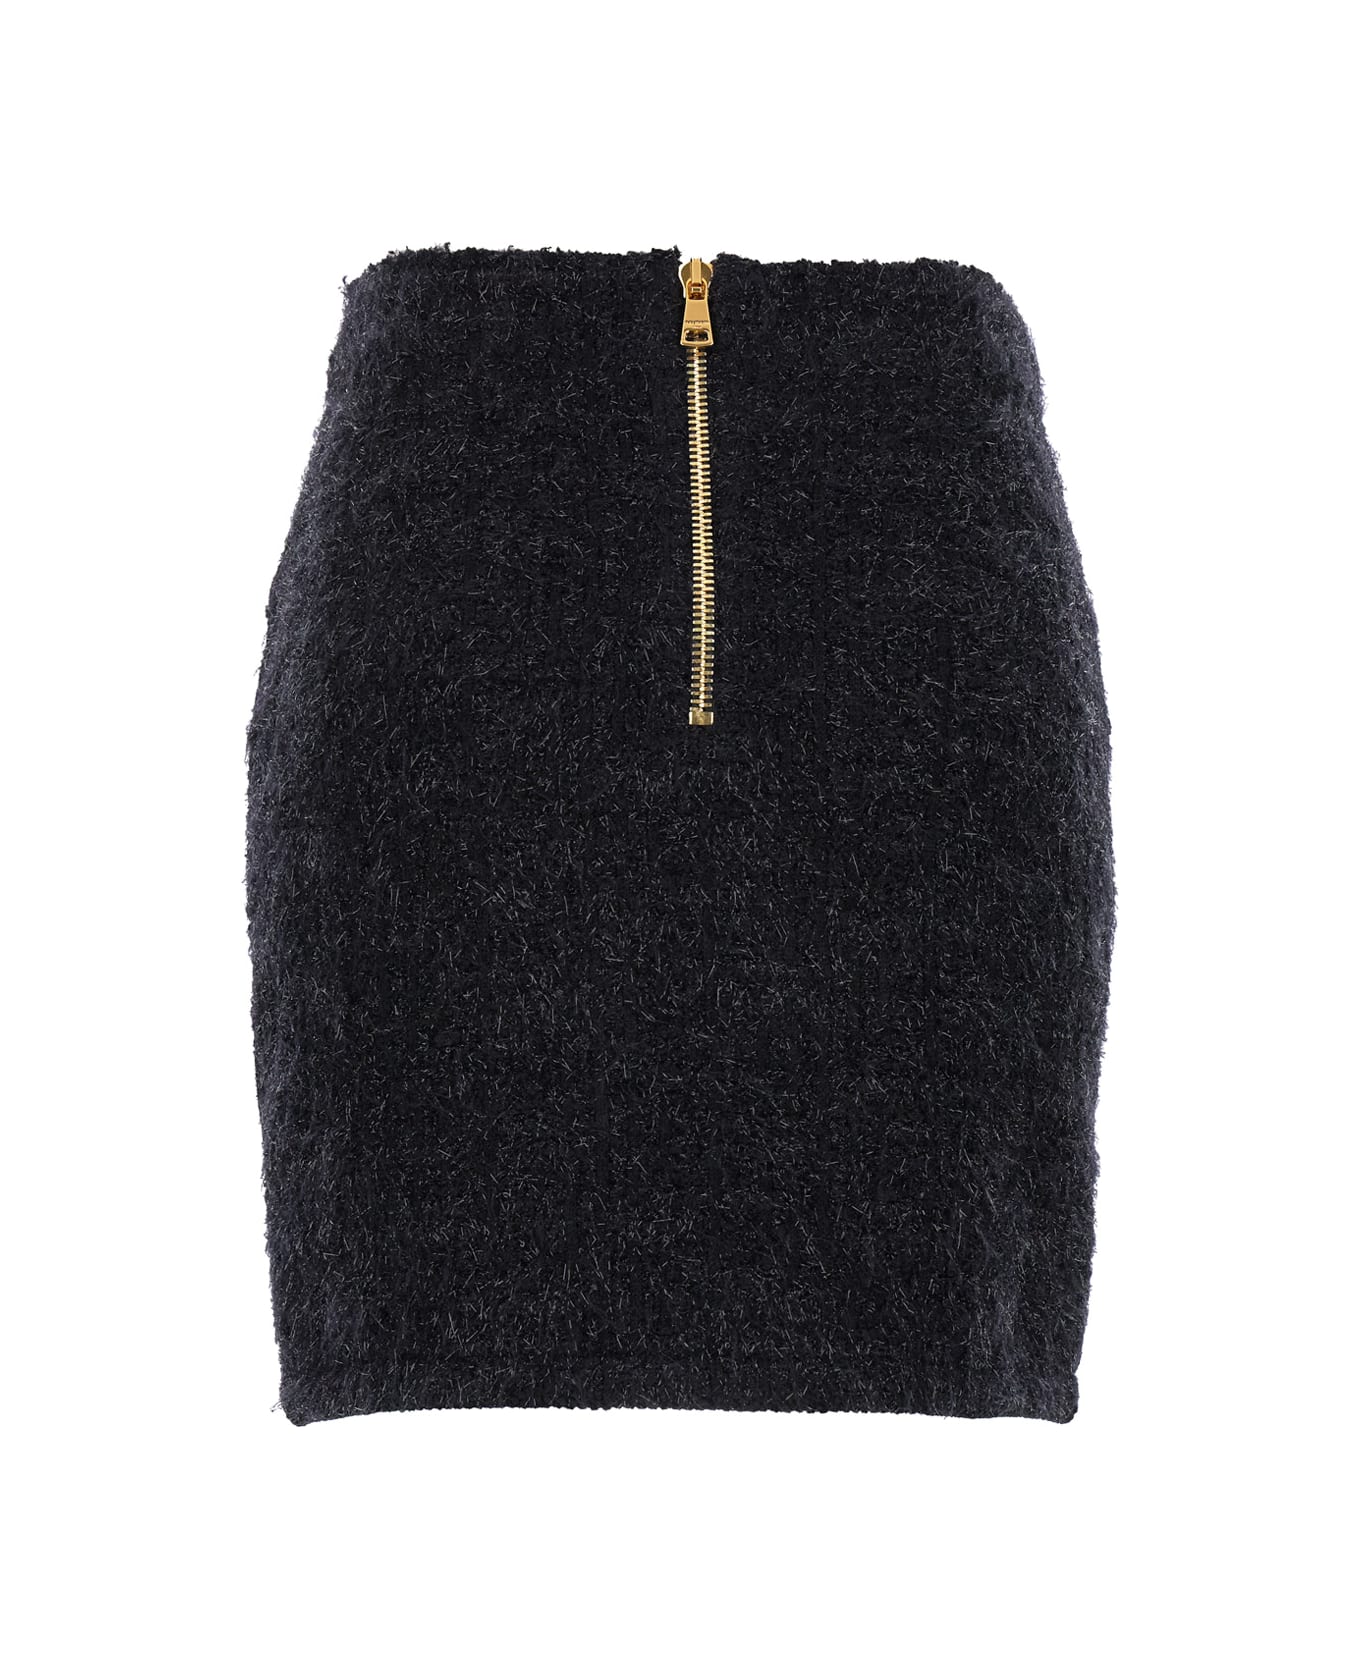 Balmain Black Pencil Mini Skirt With Jewel Buttons In Tweed Woman - Black スカート